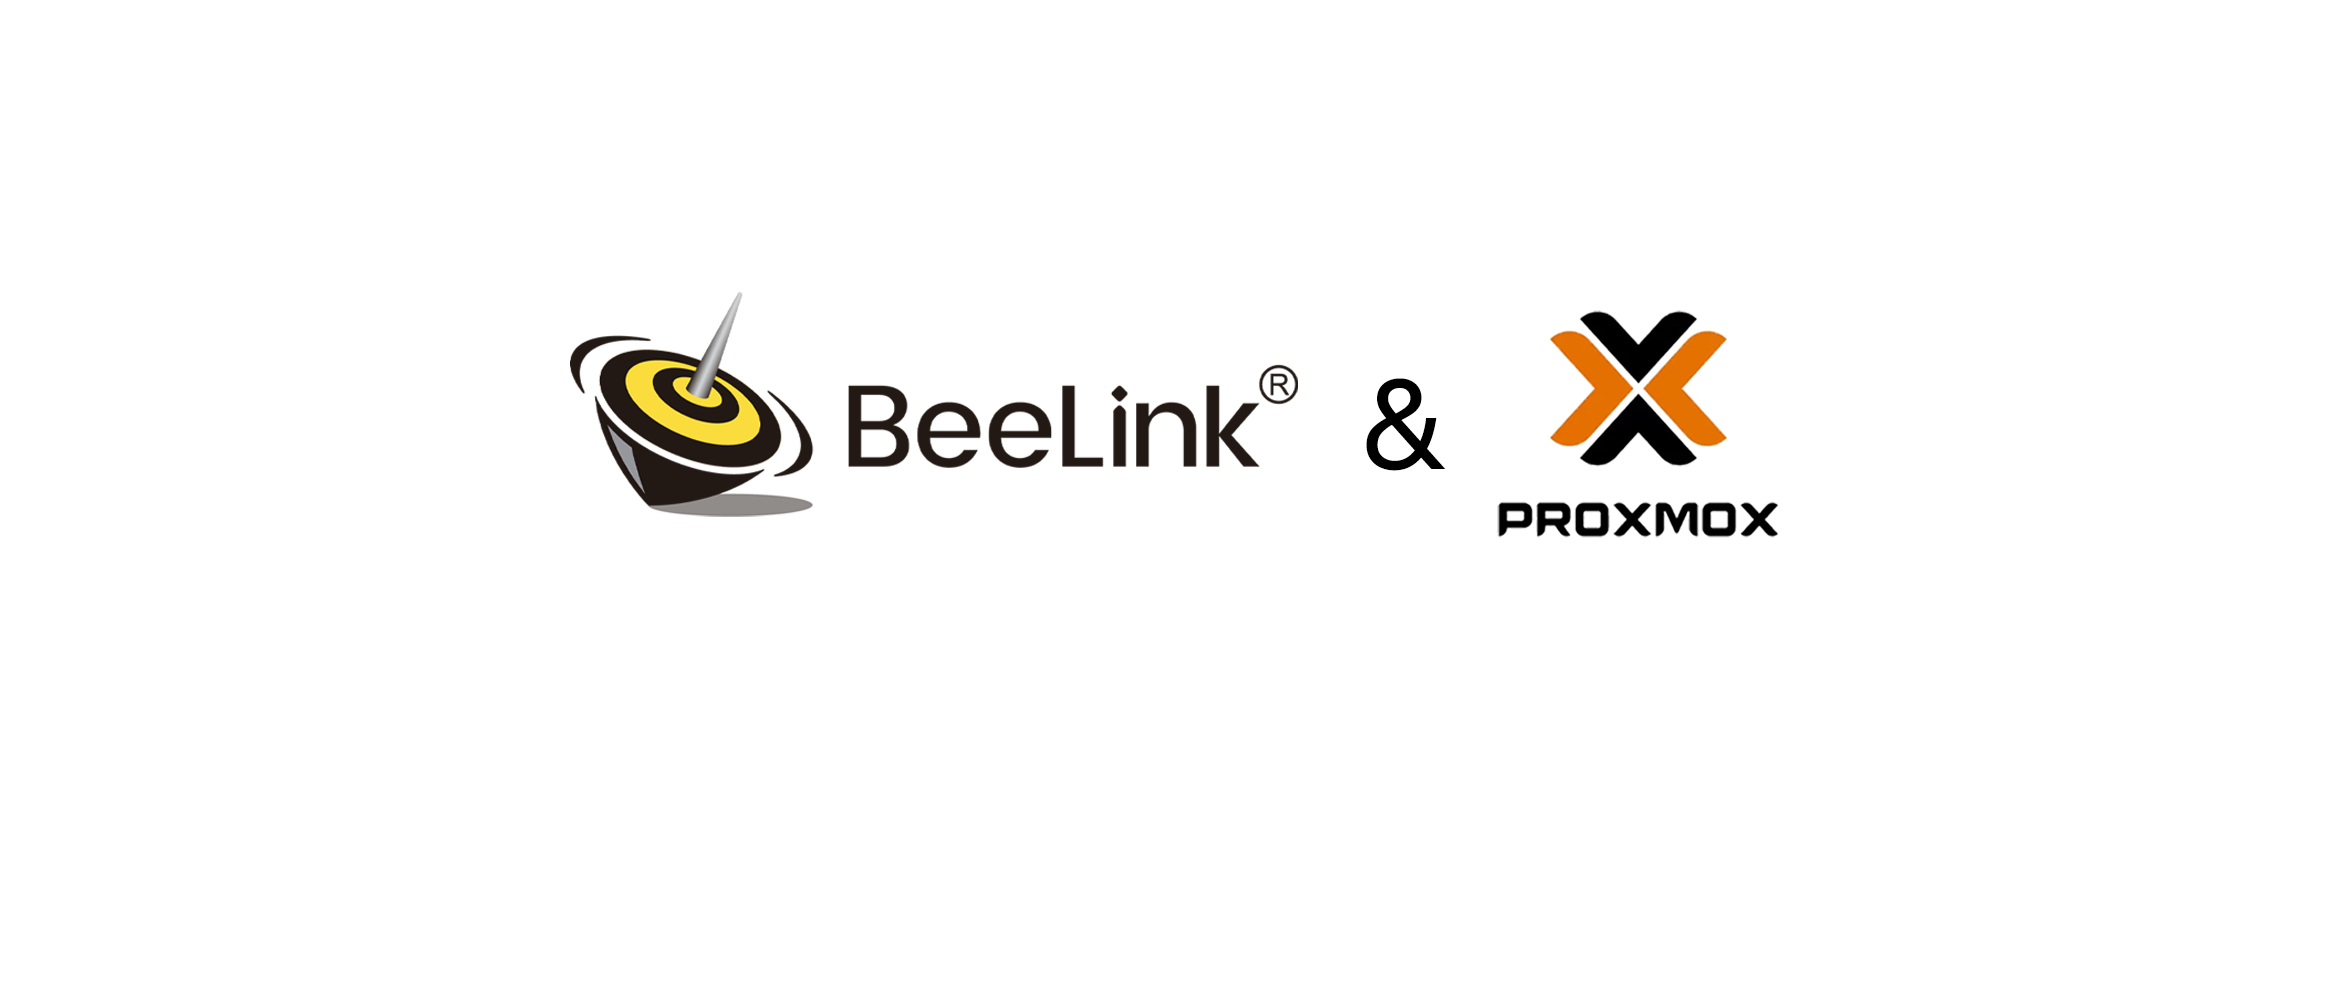 How to Install Proxmox VE on Beelink Mini PC